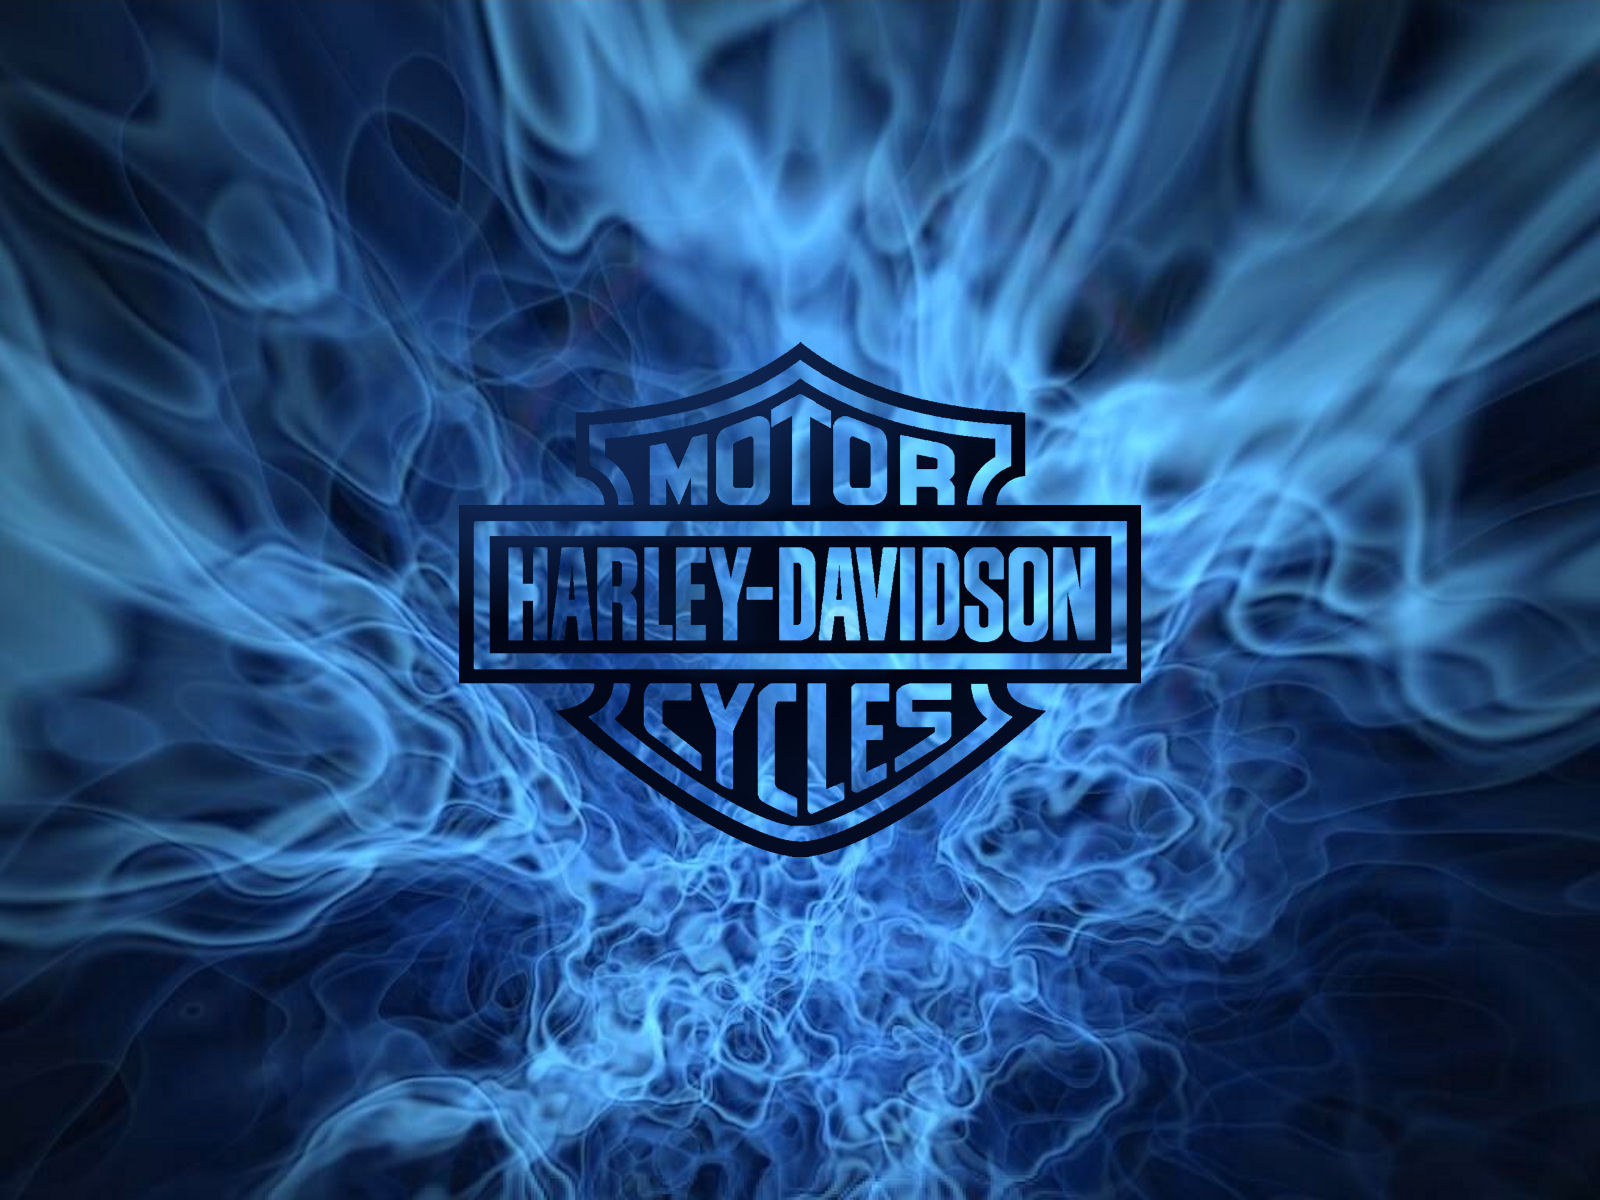 76+] Harley Davidson Logo Wallpaper - WallpaperSafari